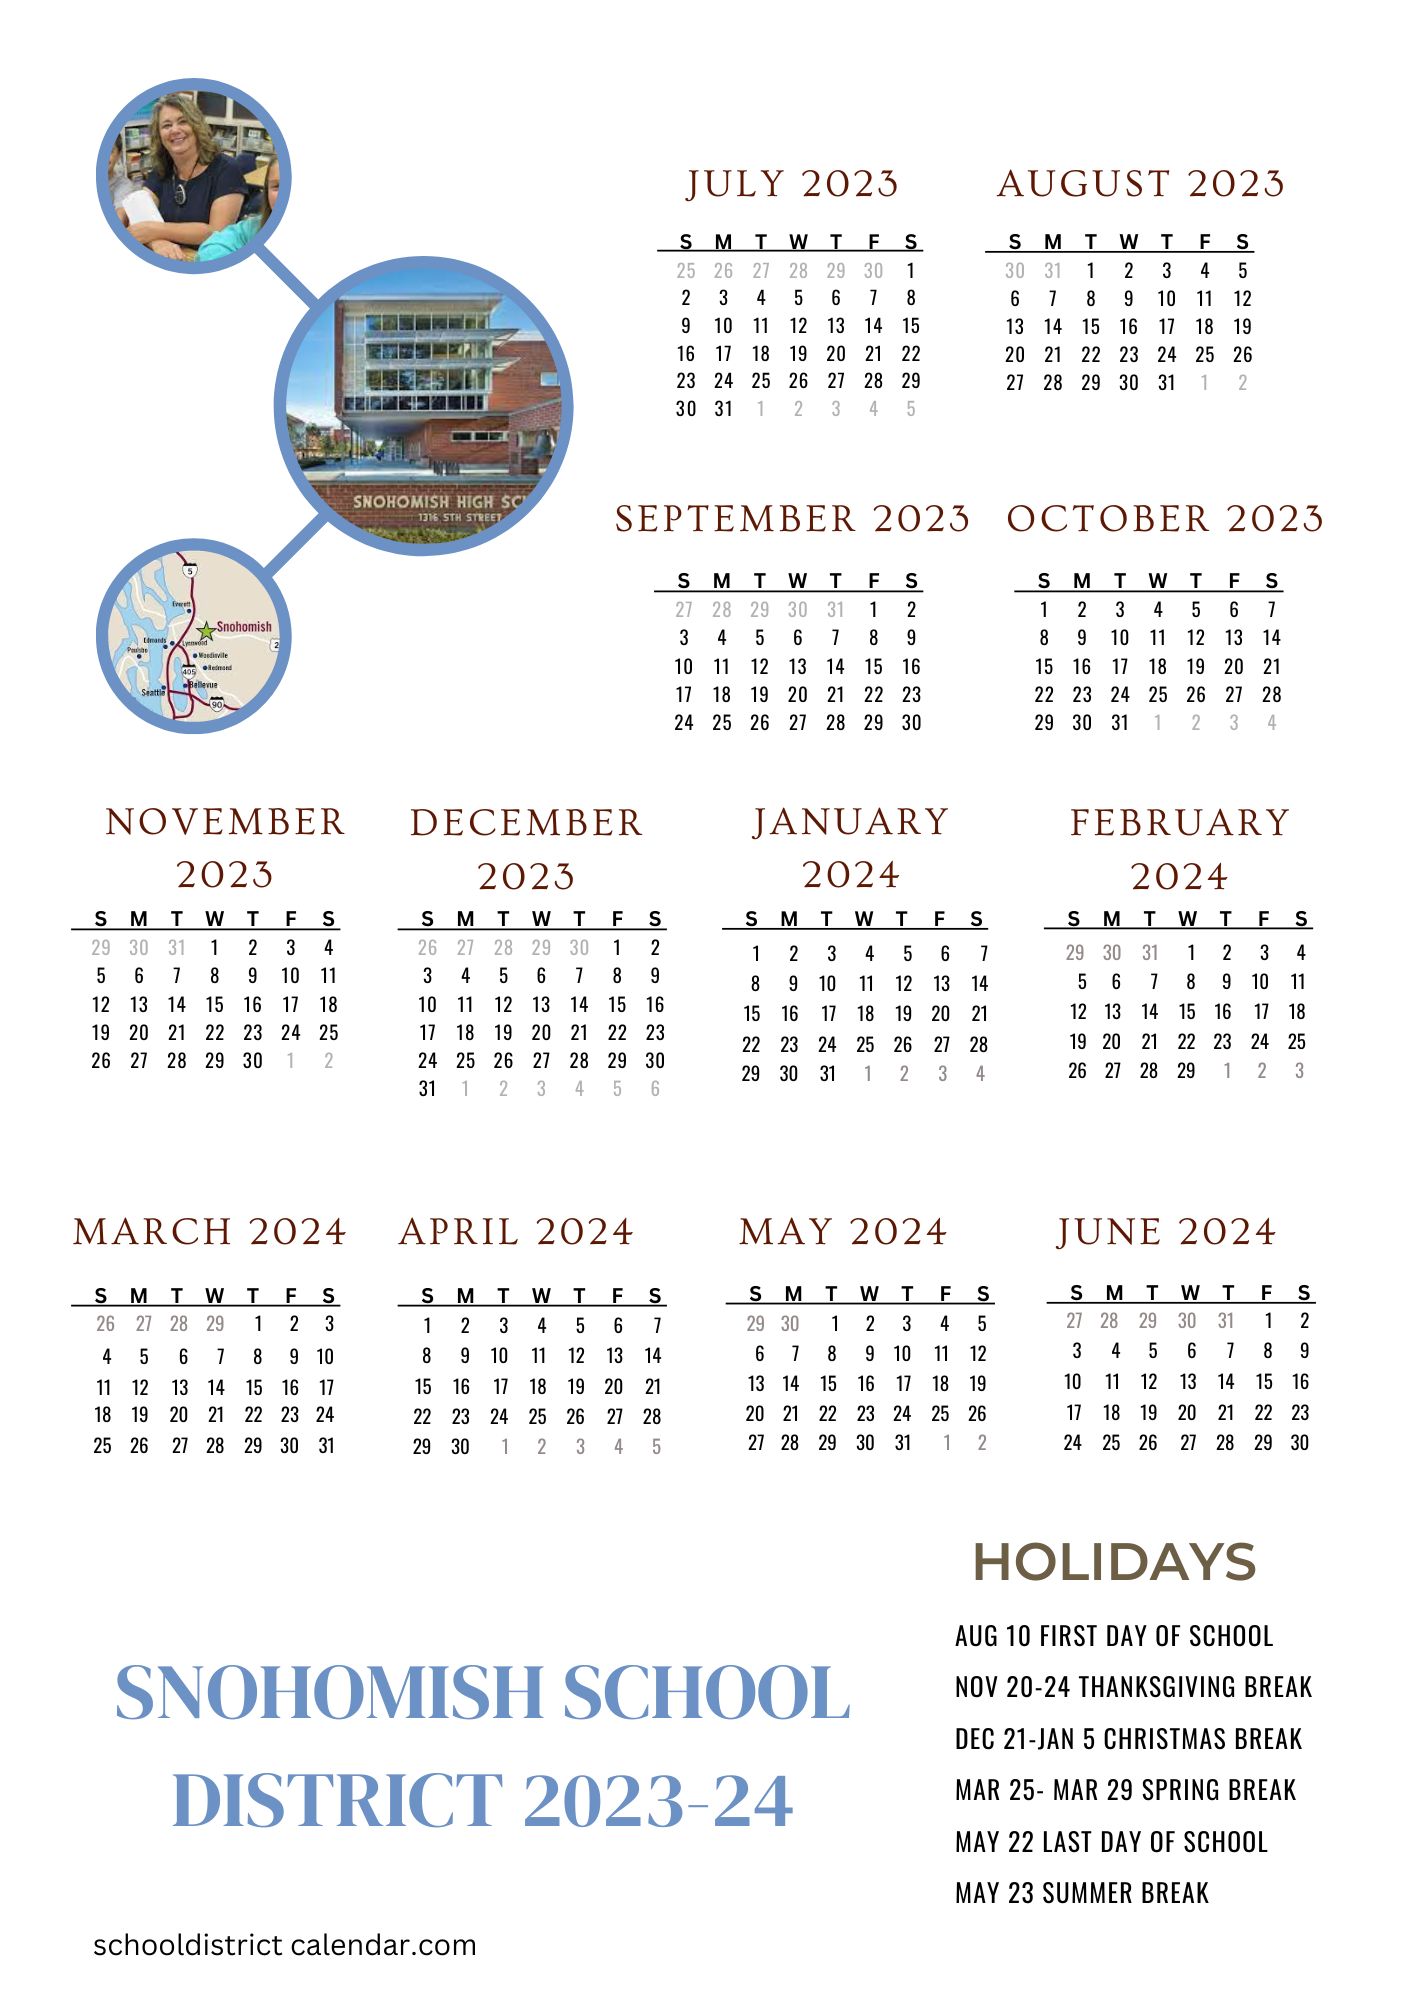 Snohomish School District Calendar 2025